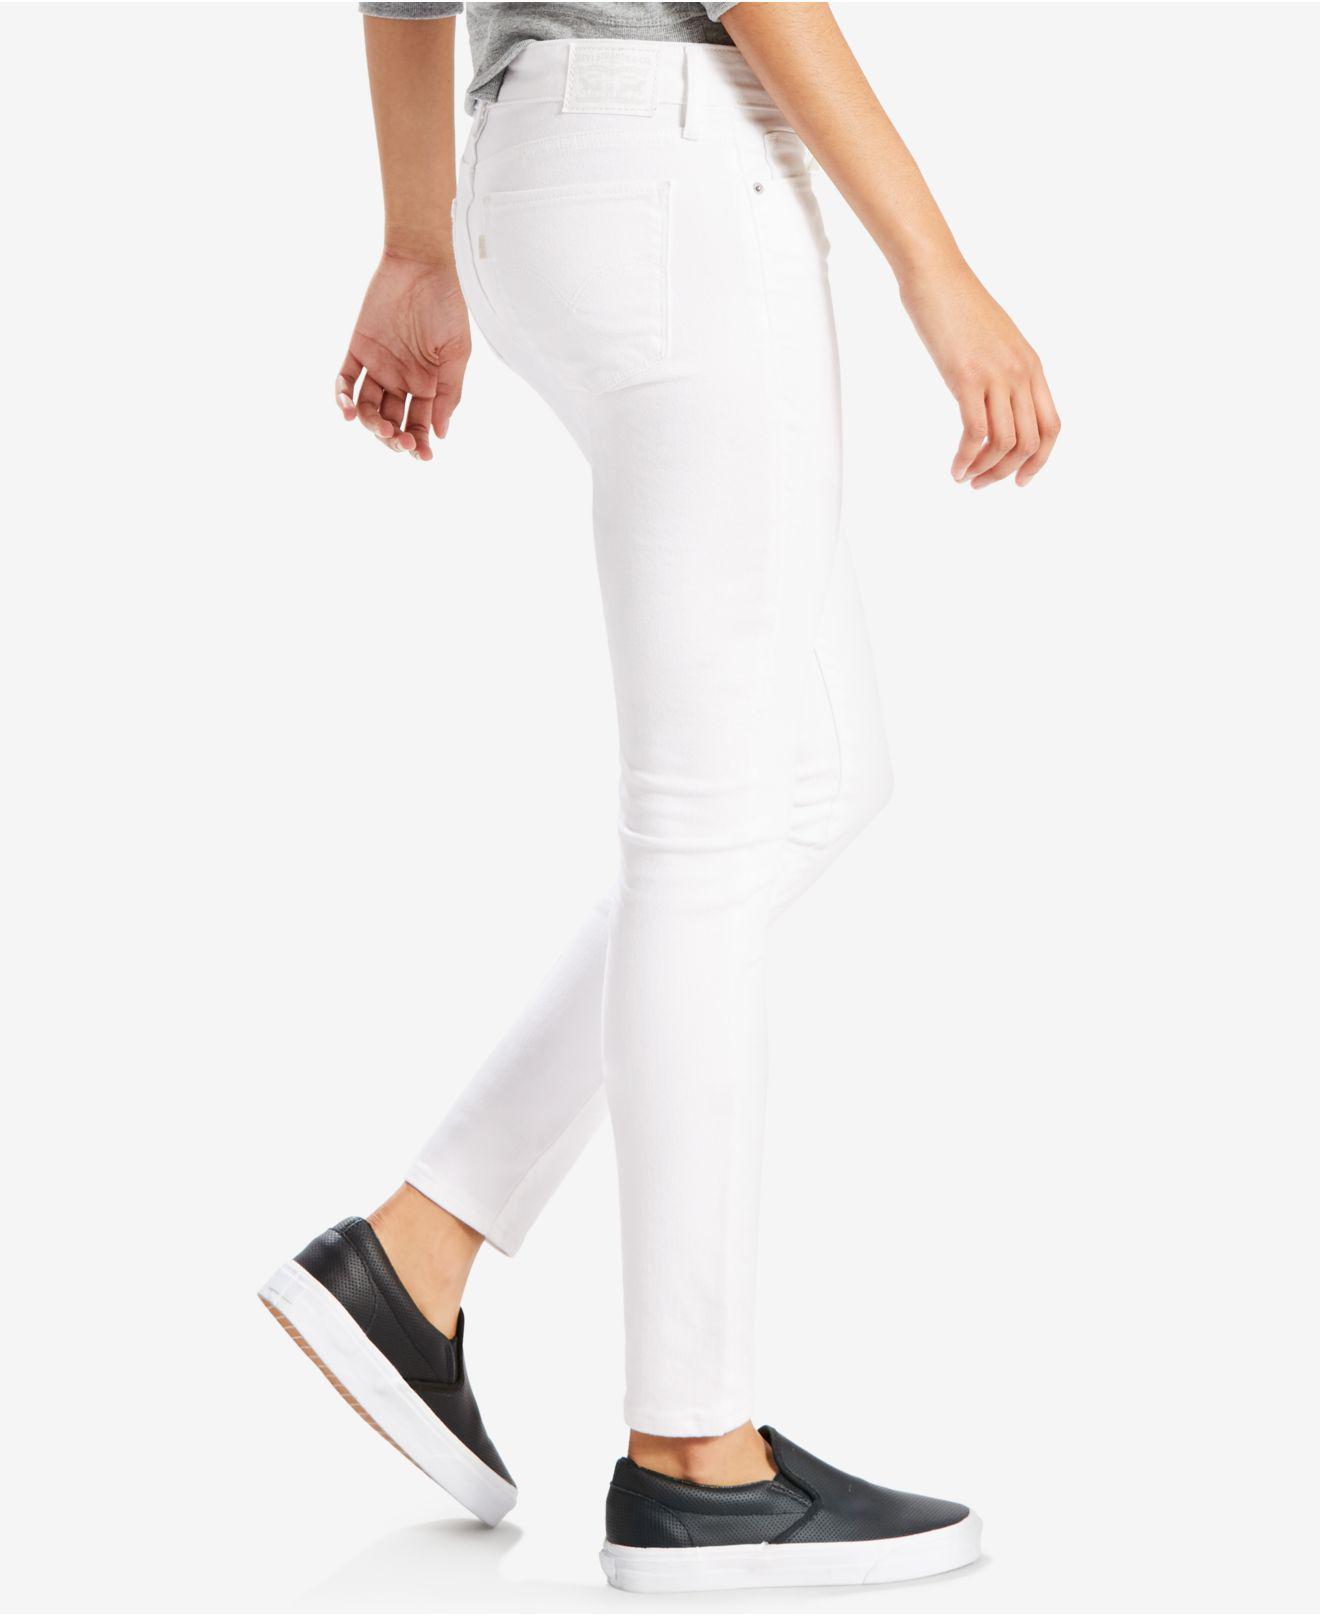 Actualizar 80+ imagen levi's women's 711 skinny jeans - Abzlocal.mx